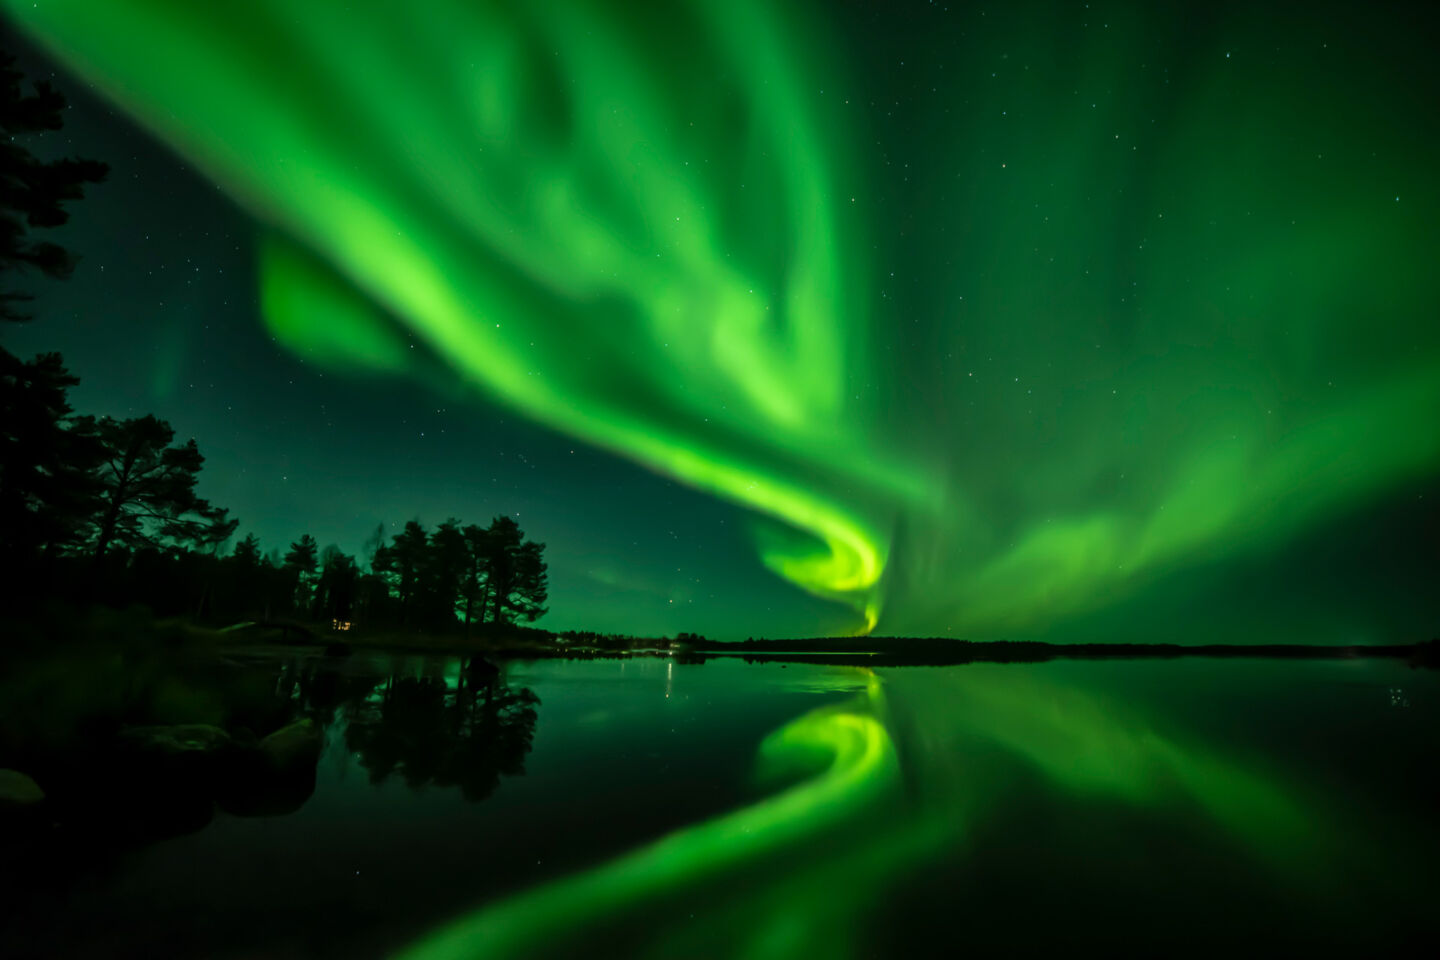 Auroras light up the Arctic sky over Ranua, Finland